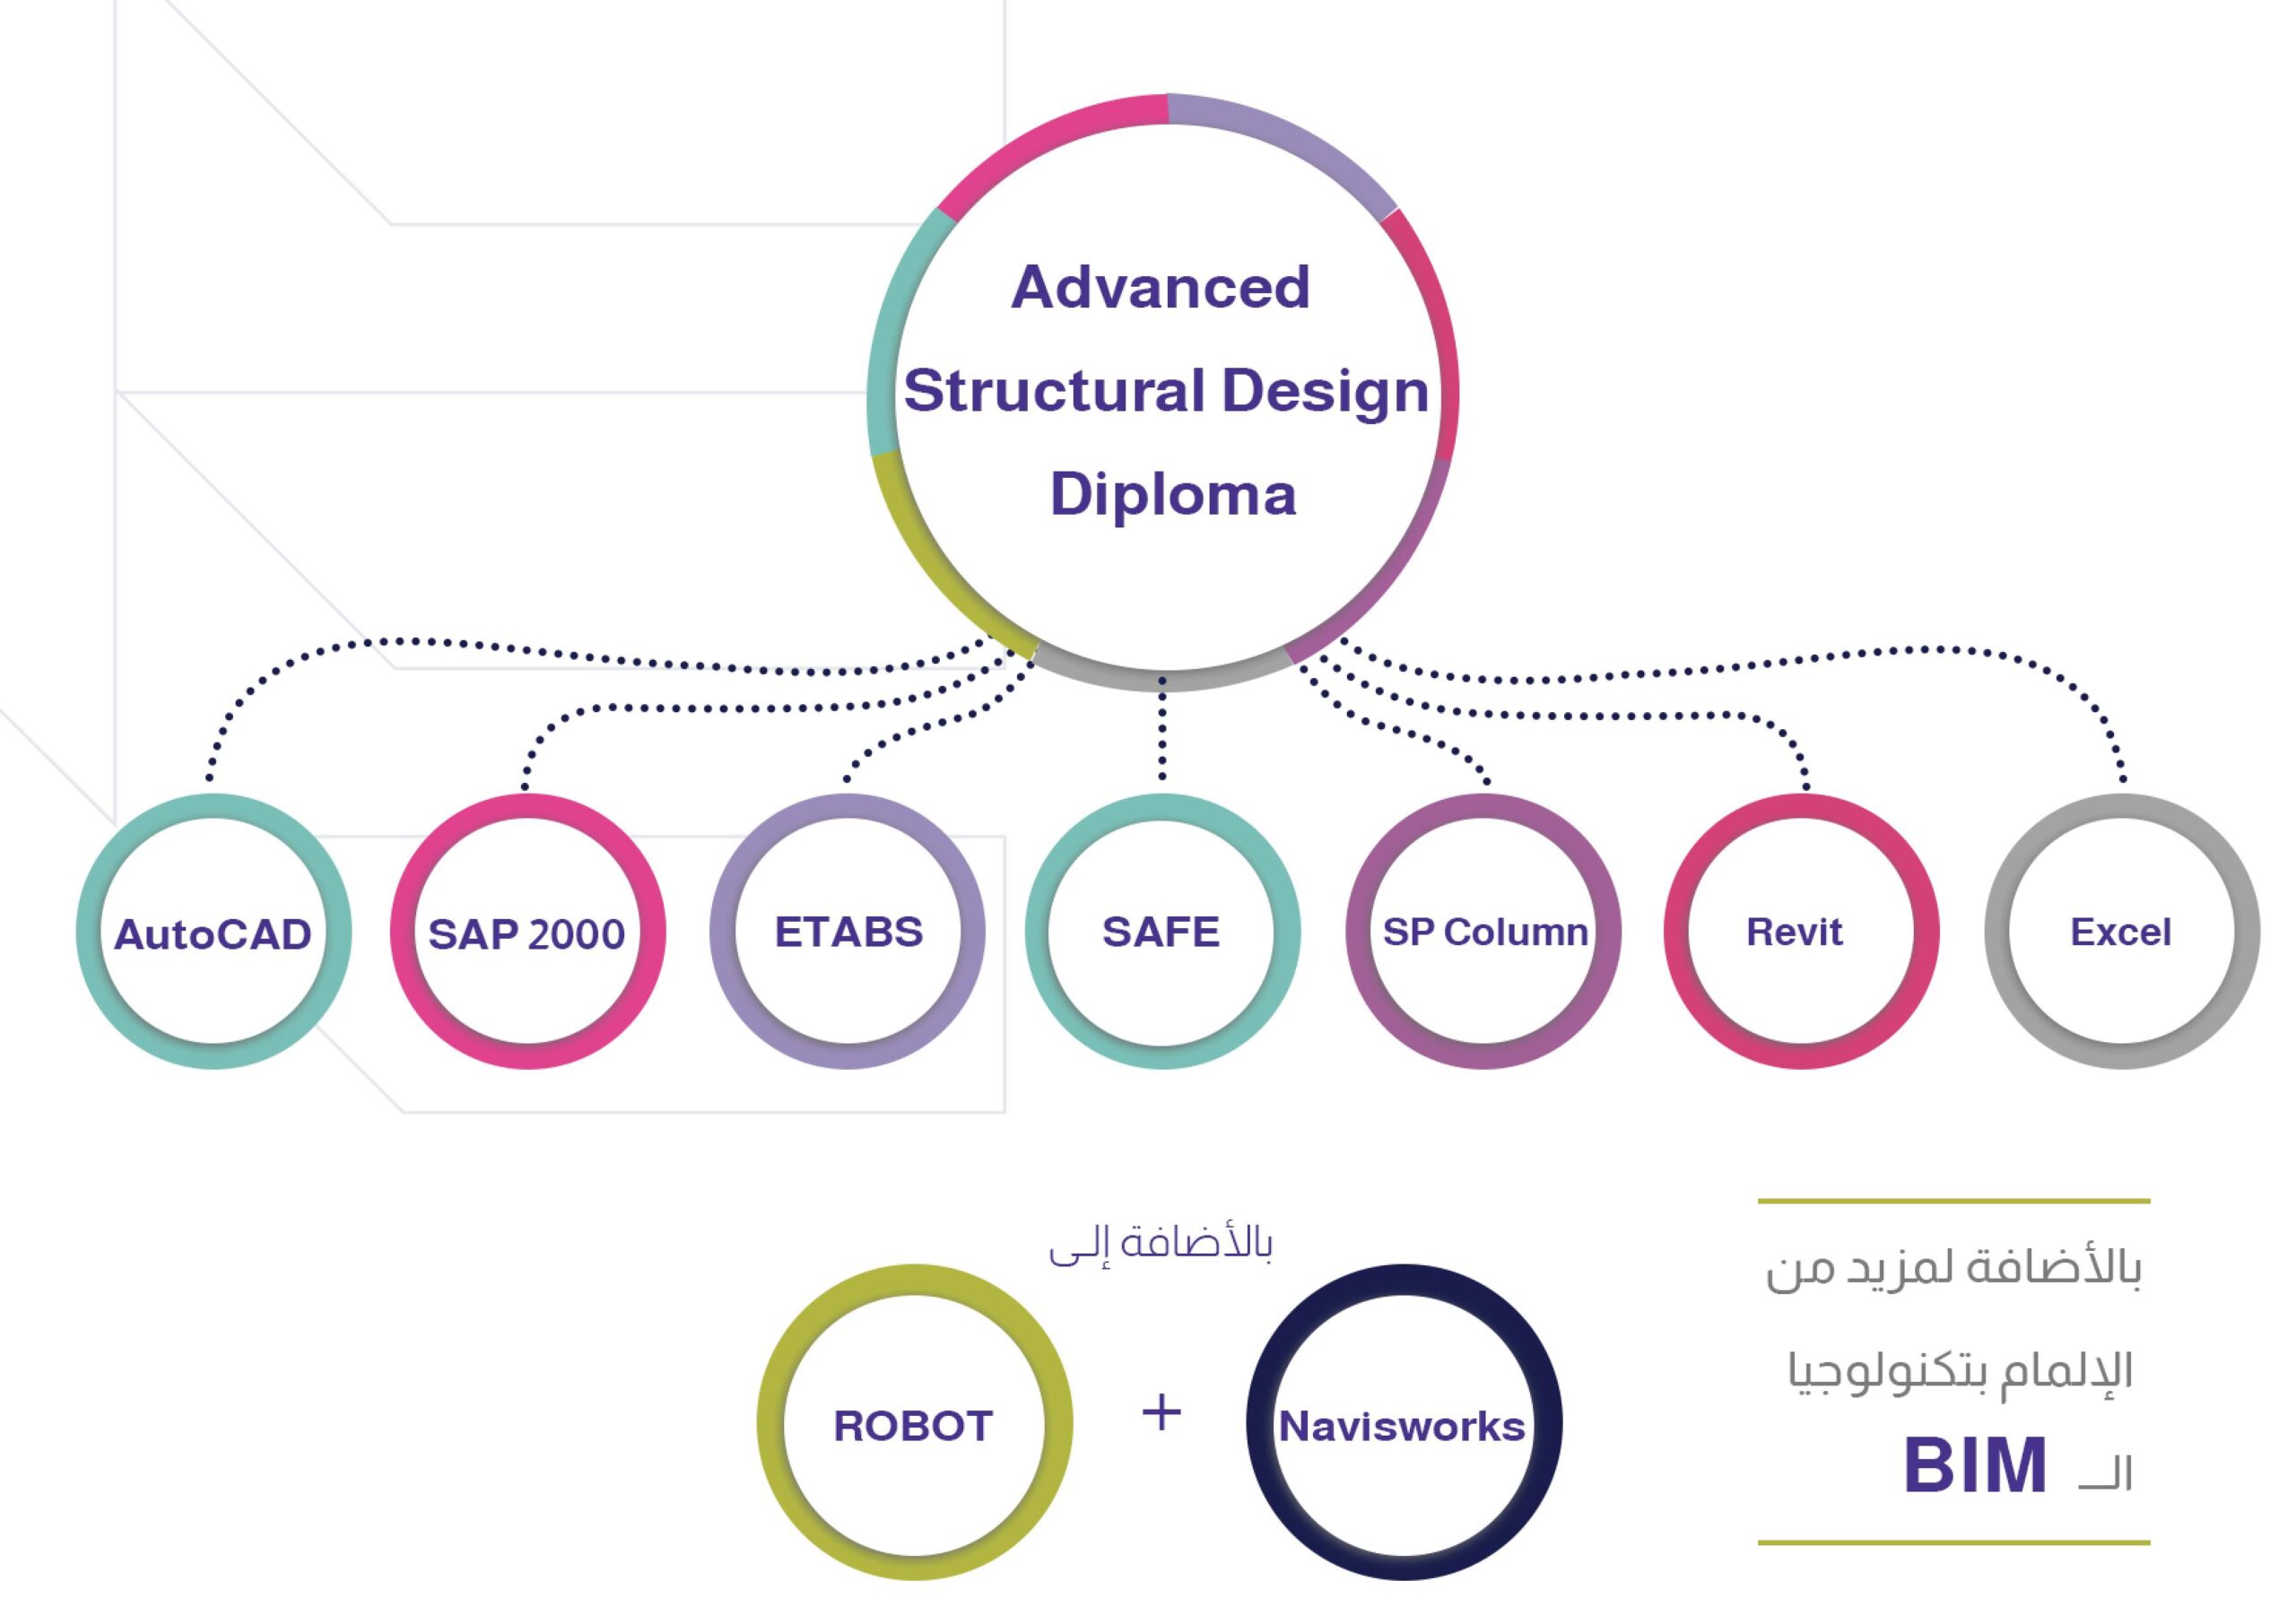 Advanced Structural Design Diploma